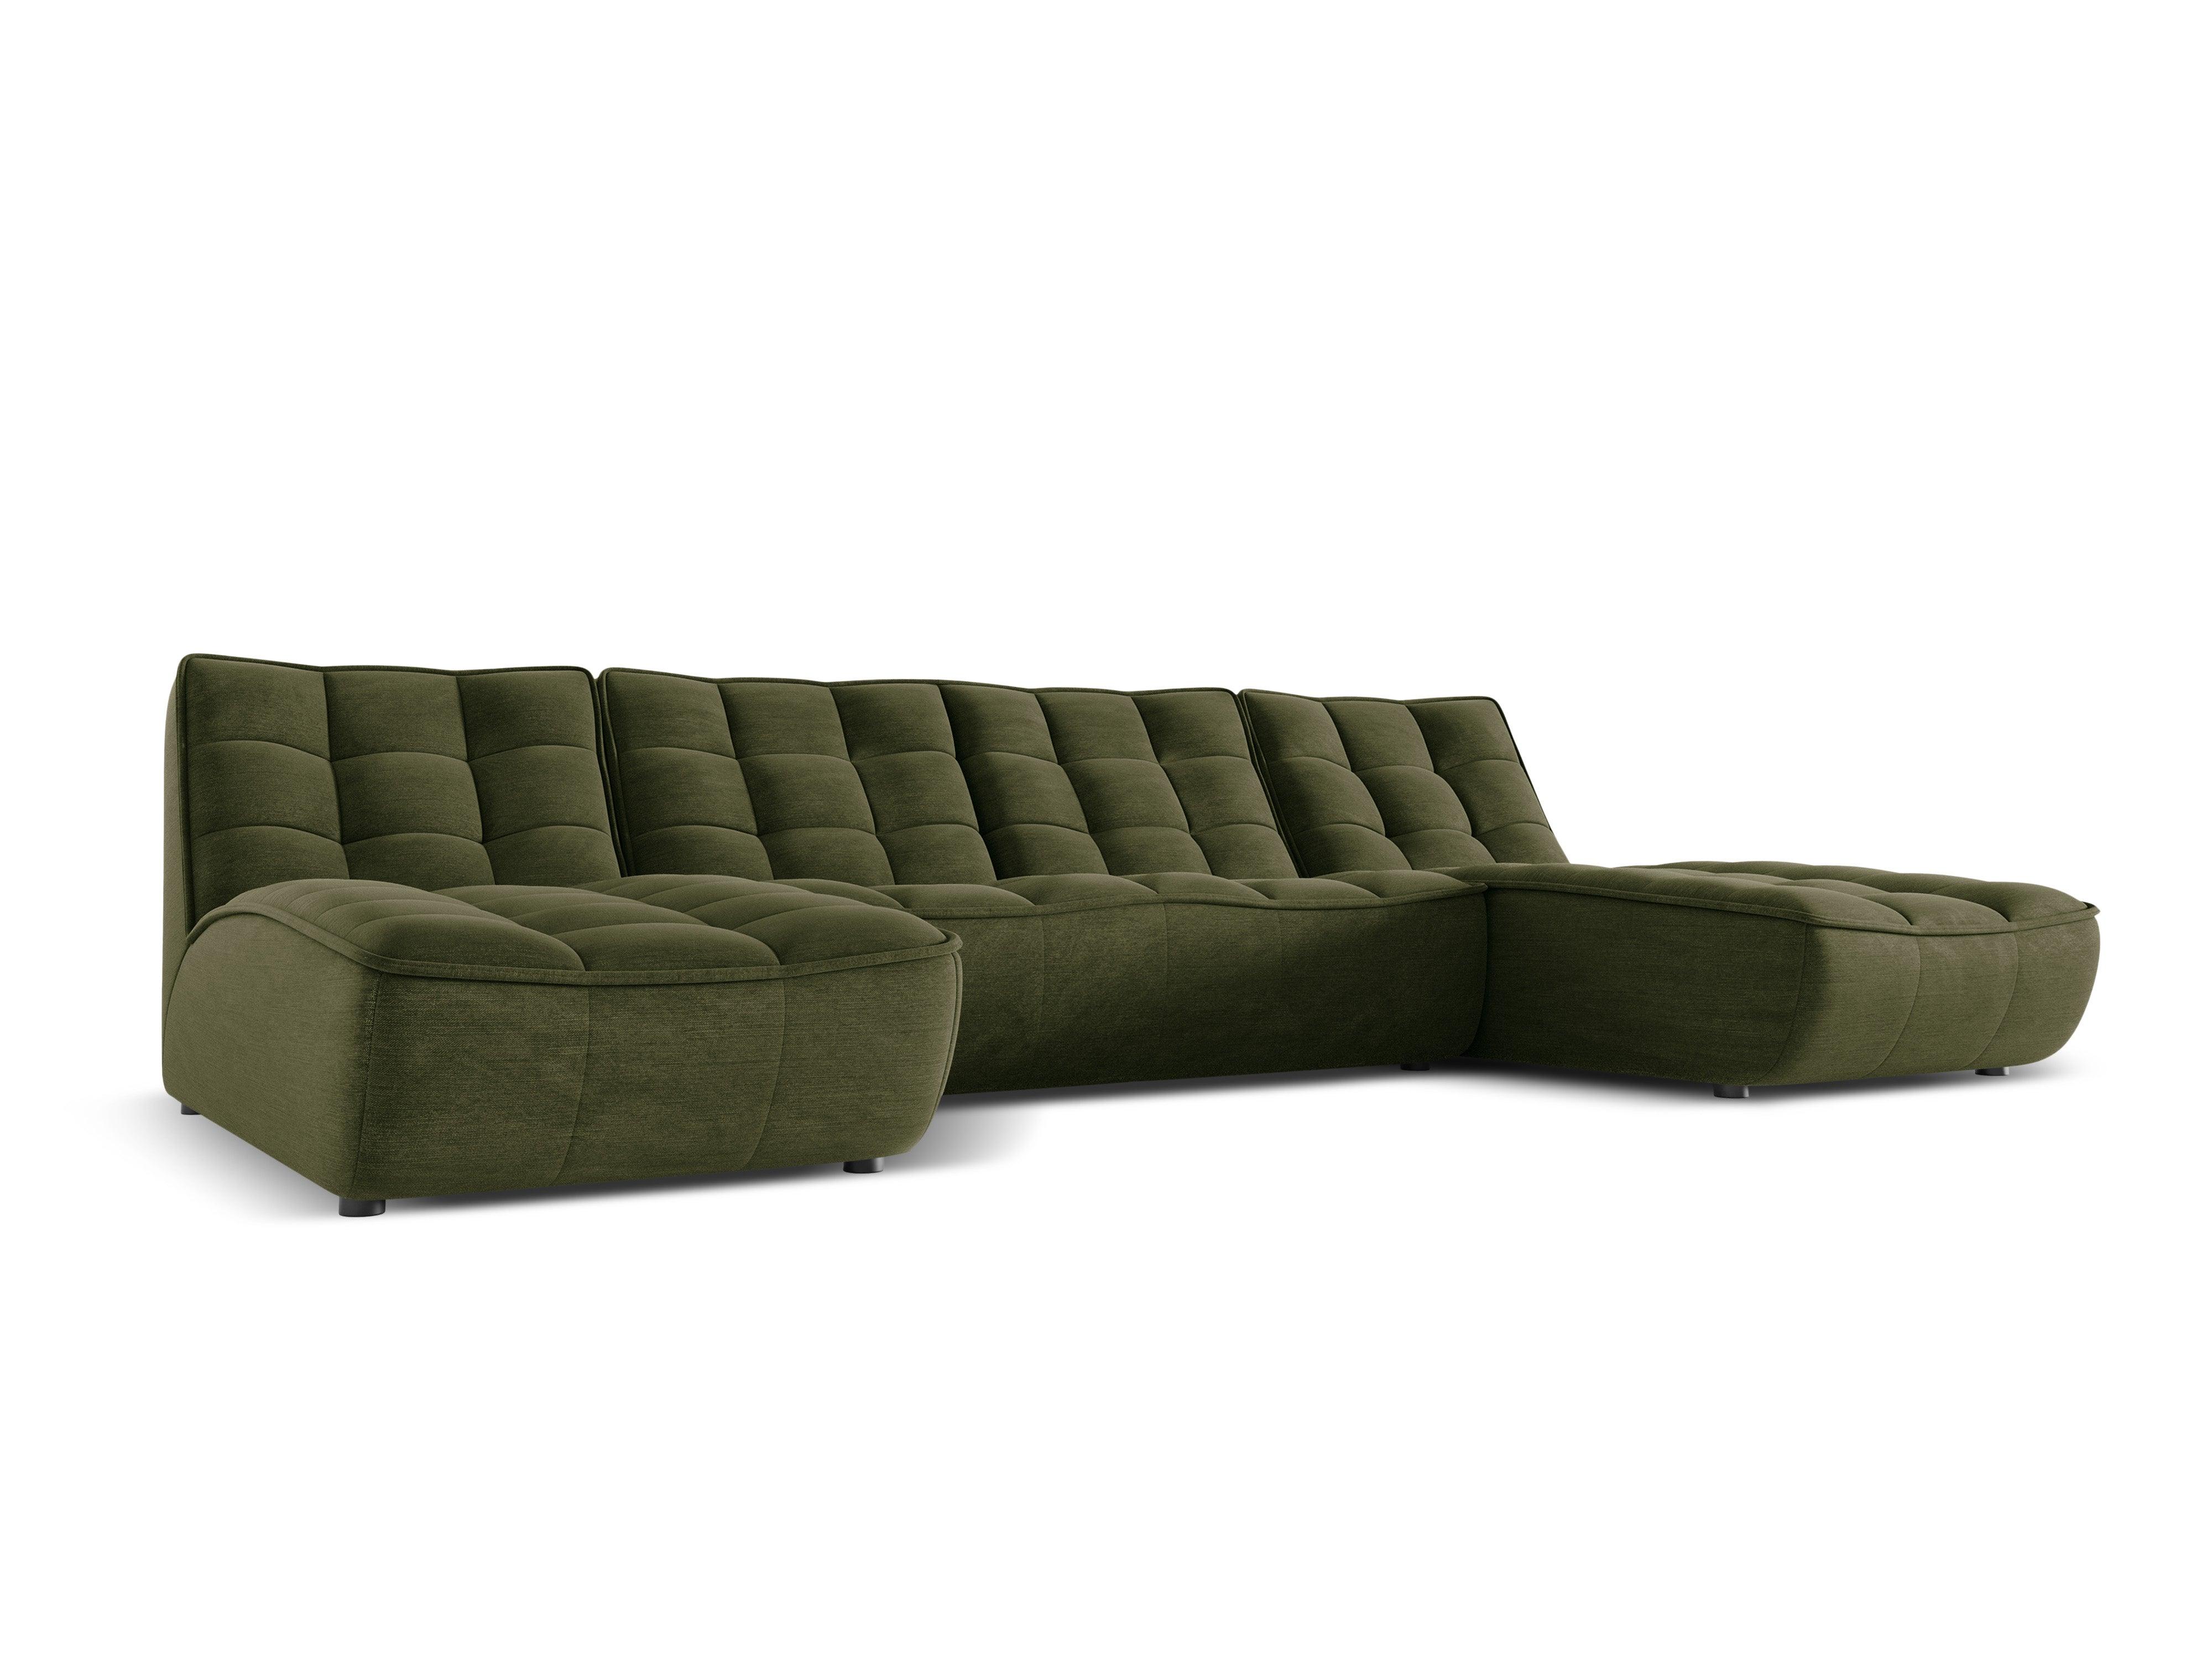 Modular Panoramic Sofa, "Moni", 6 Seats, 329x172x91
Made in Europe, Maison Heritage, Eye on Design